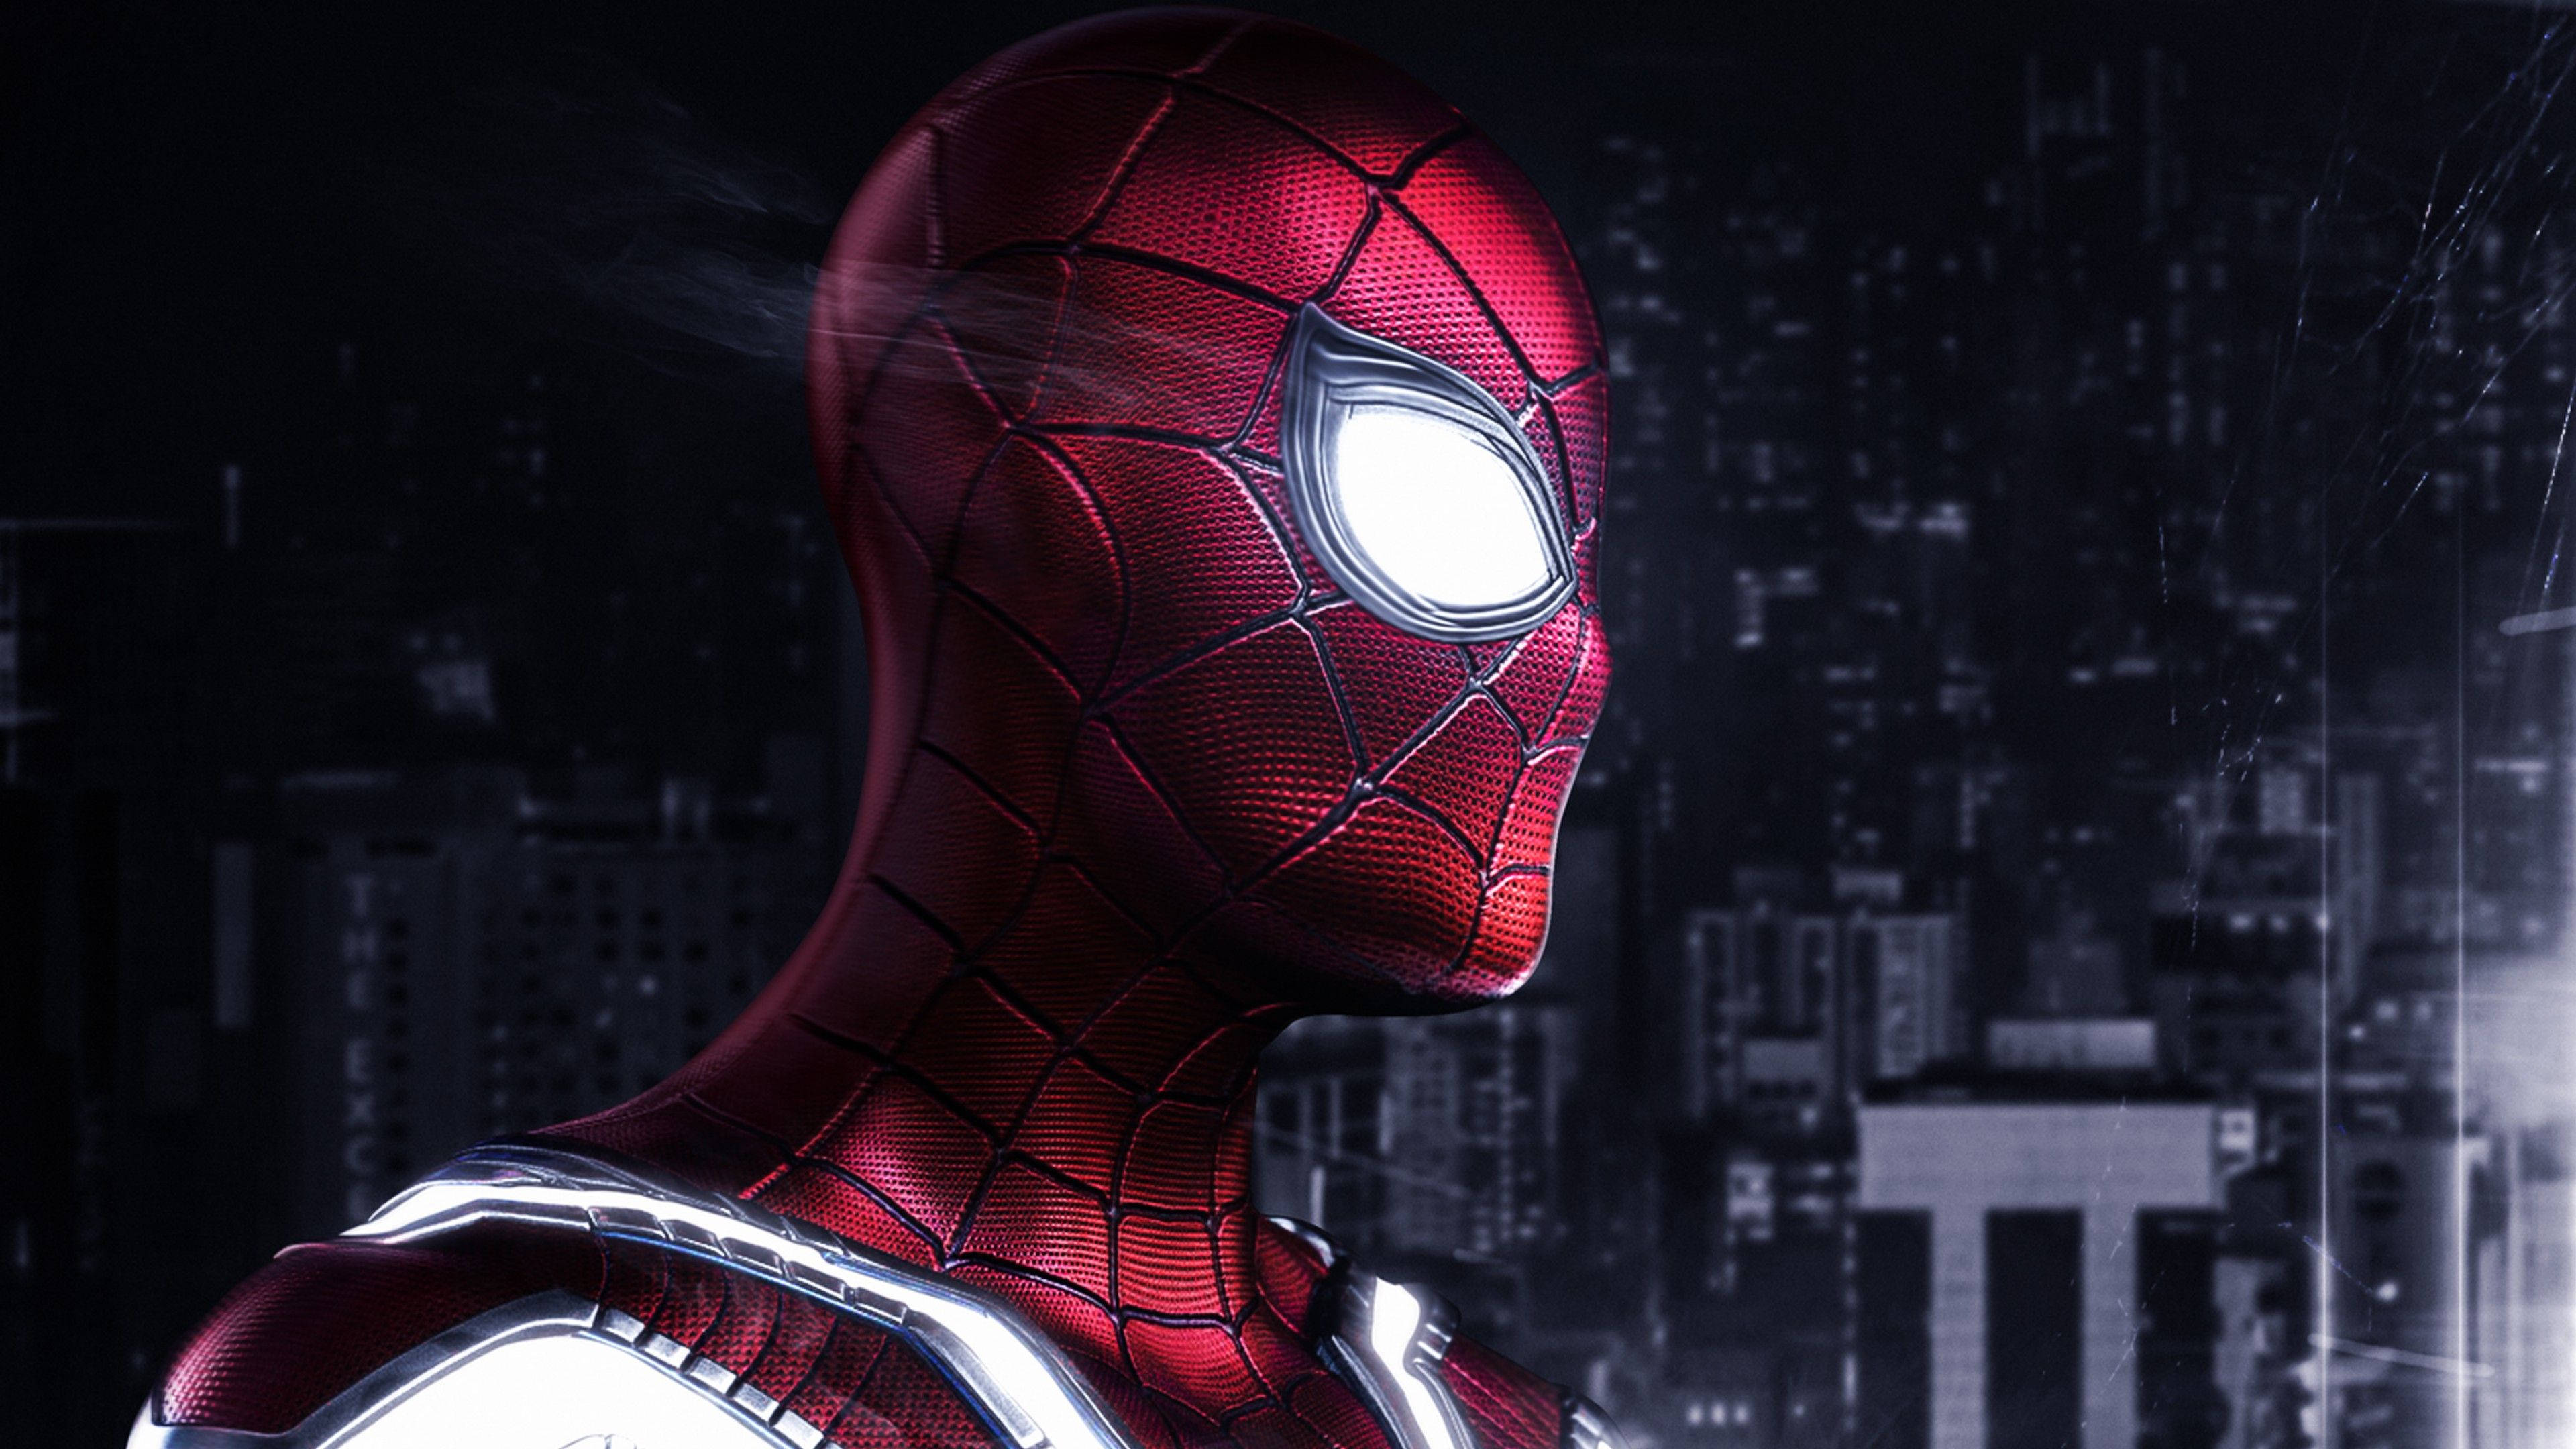 Spiderman Iron Spider Nighttime Cityscape Wallpaper